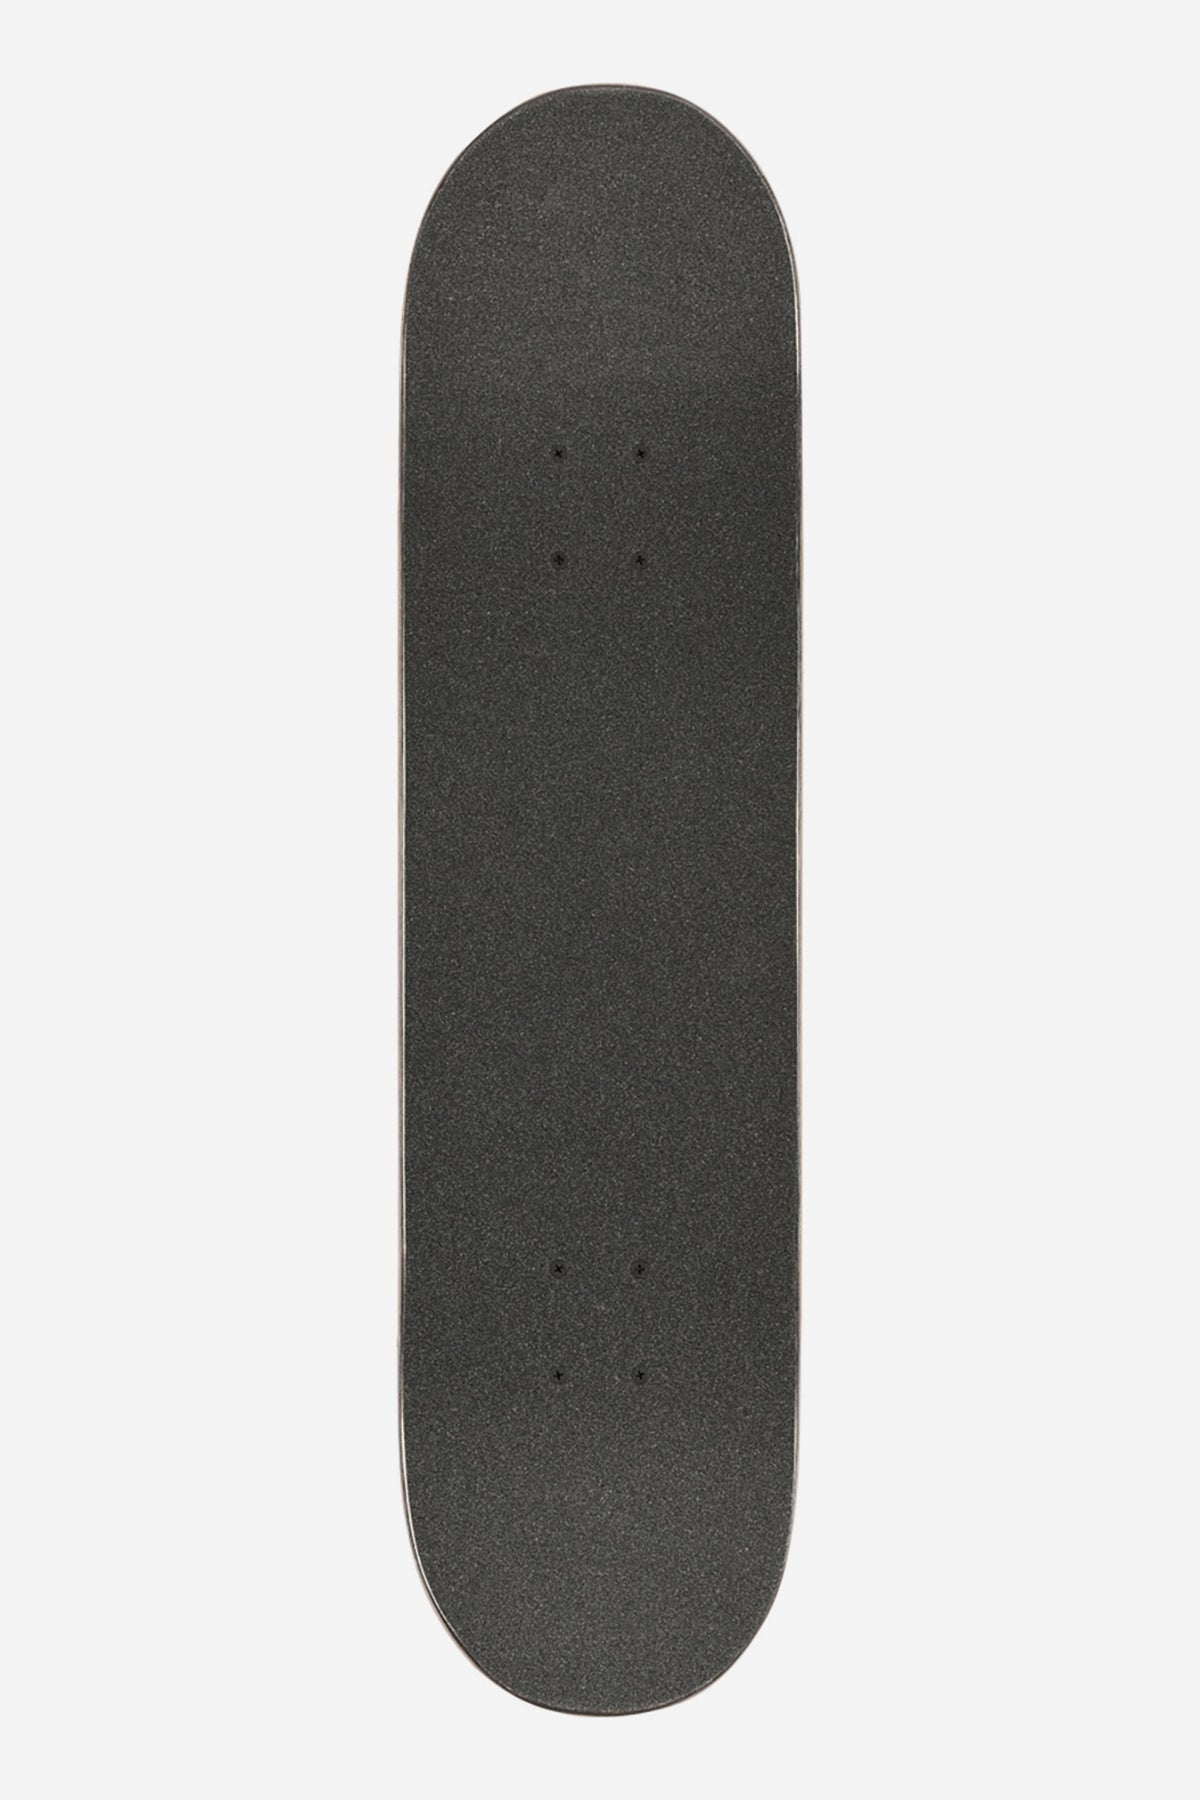 Goodstock - Clay - 8.5" Complete Skateboard